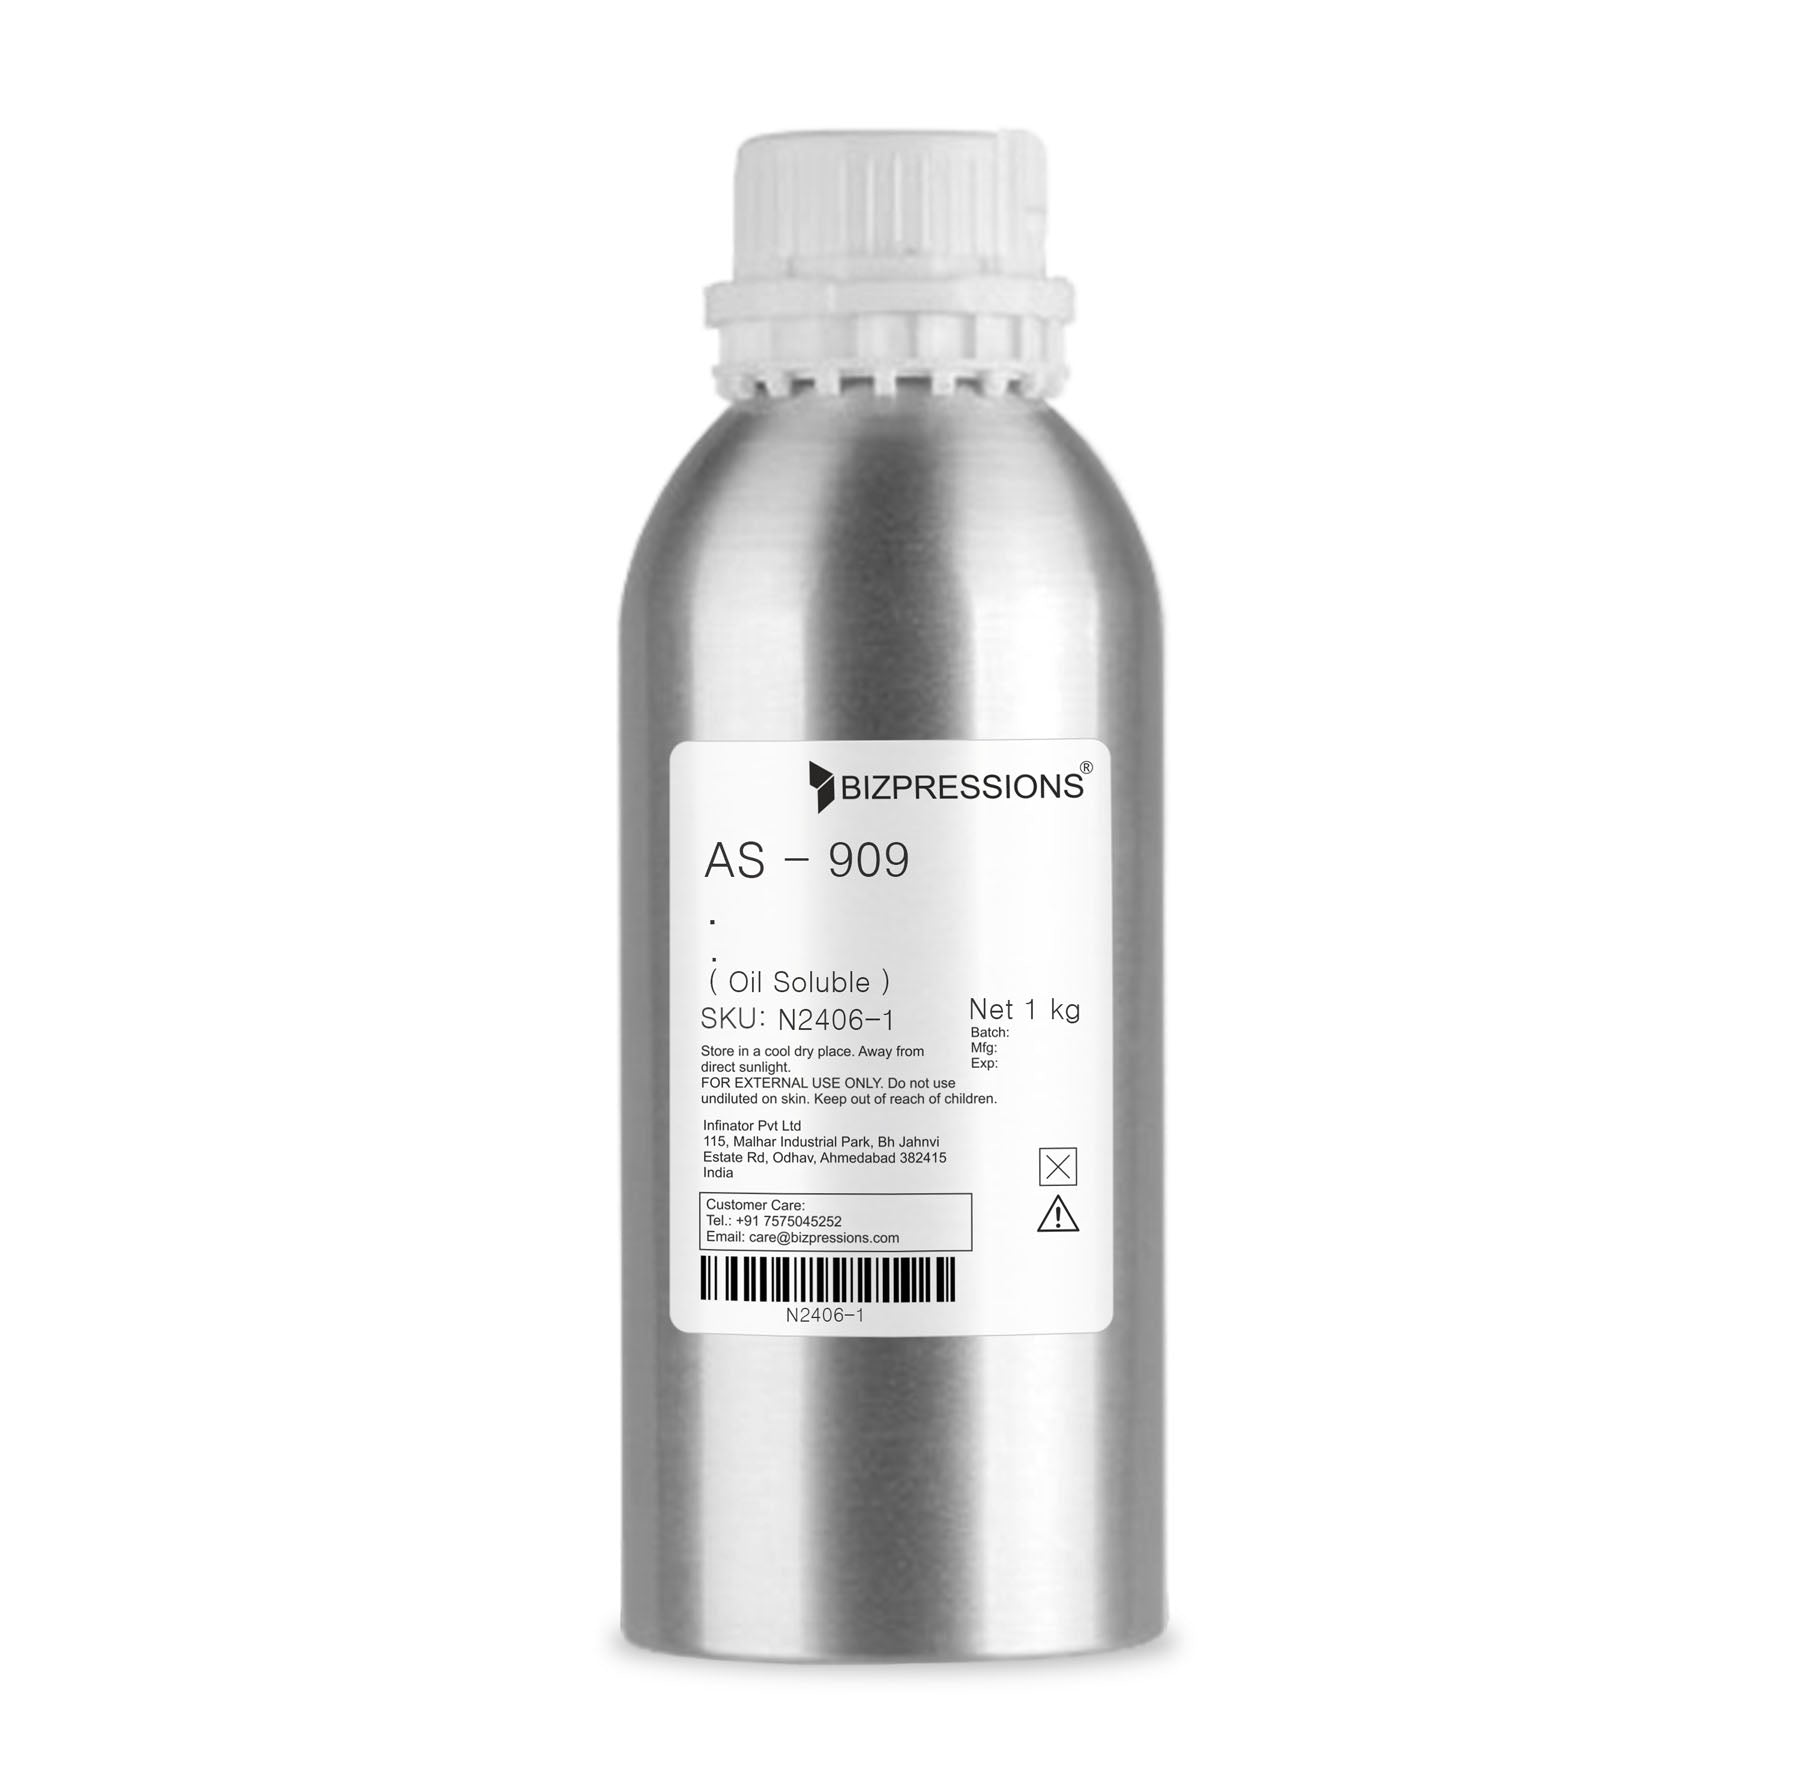 AS - 909 - Fragrance ( Oil Soluble ) - 1 kg